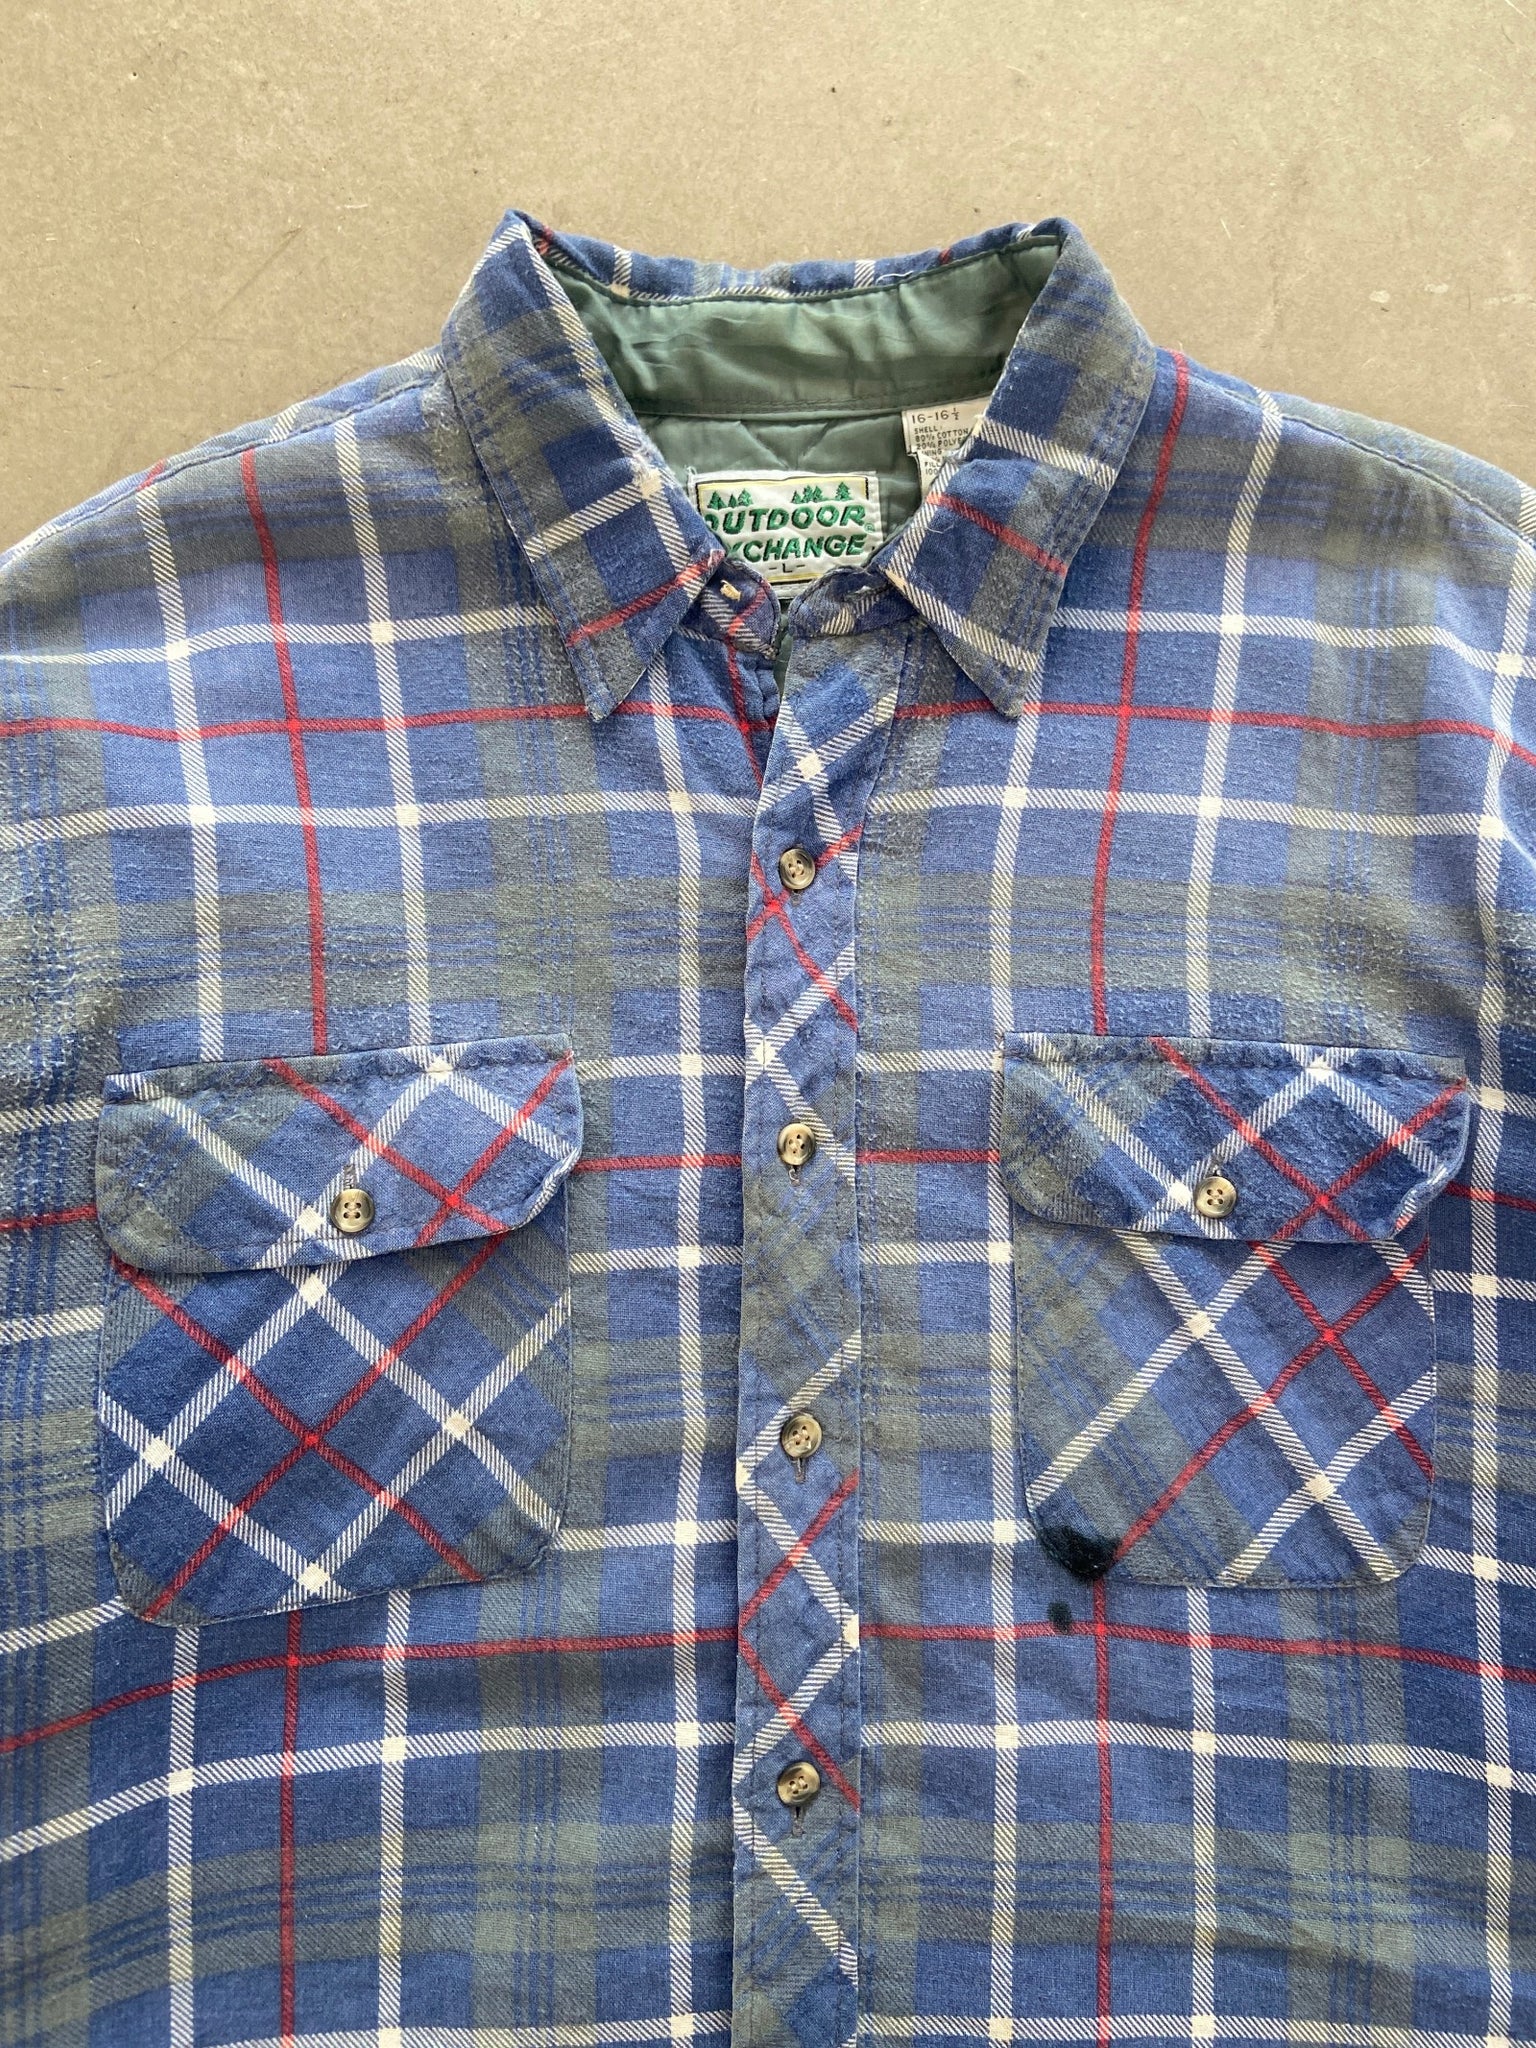 1990's Outdoor Exchange Lined Work Shirt - L